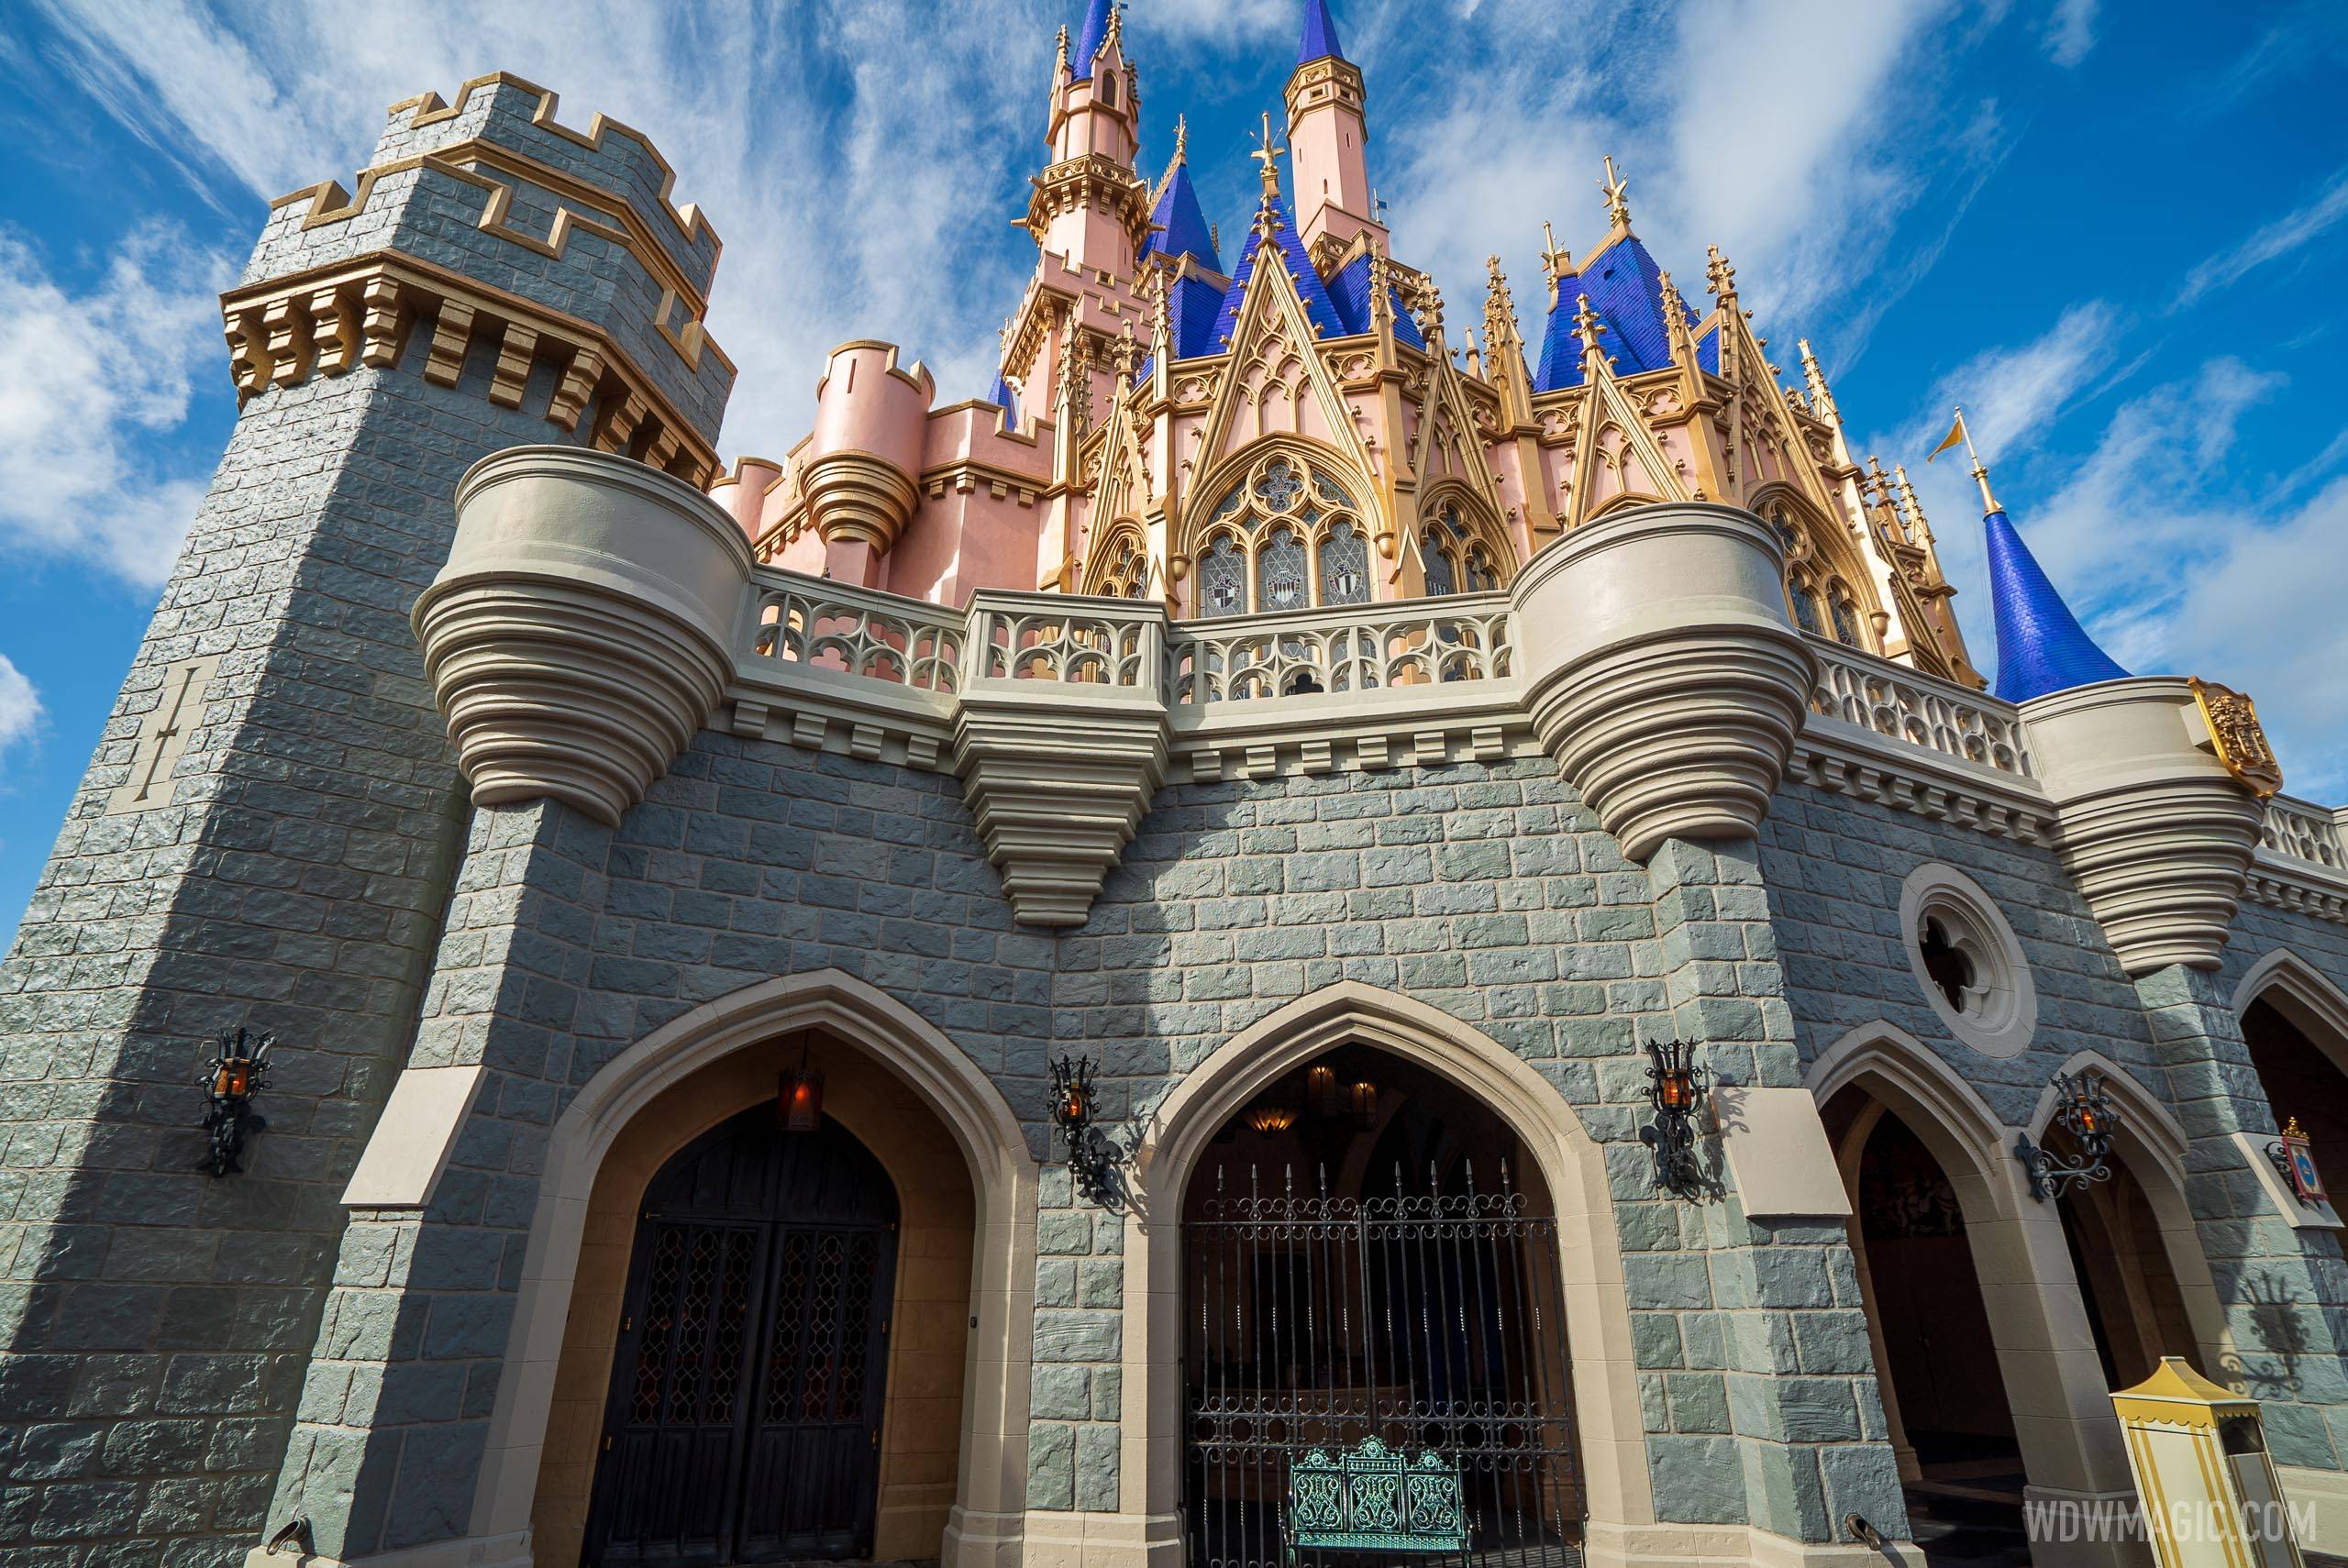 Cinderella Castle repainting - July 21 2020